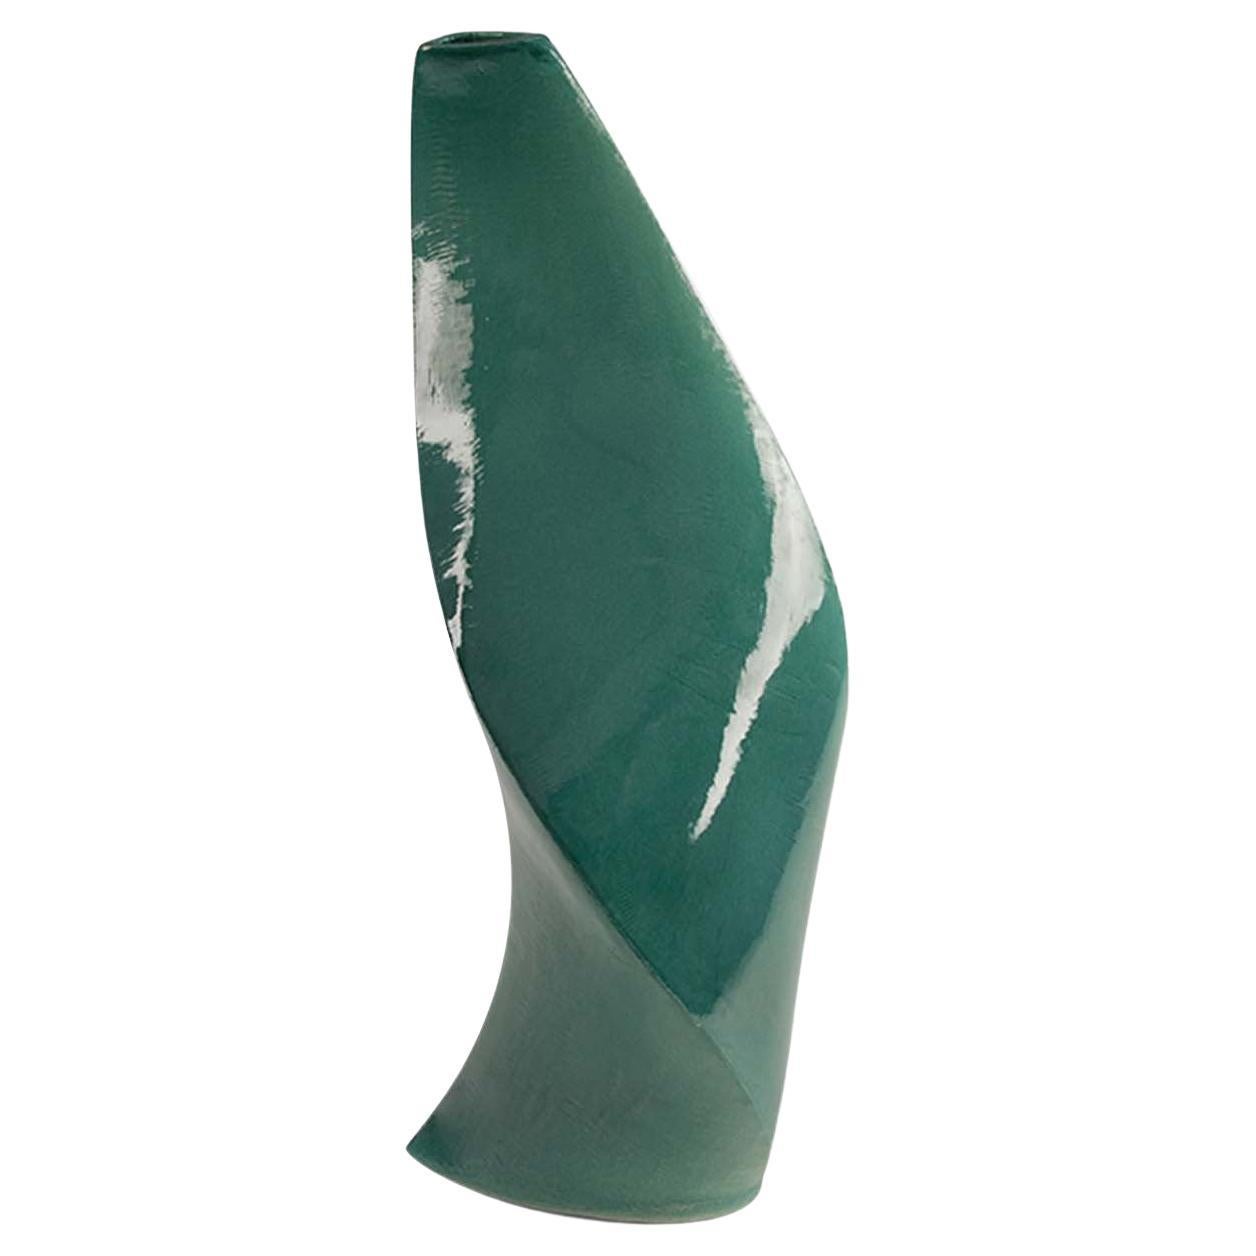 Demeter Green Sculptural Vase #1